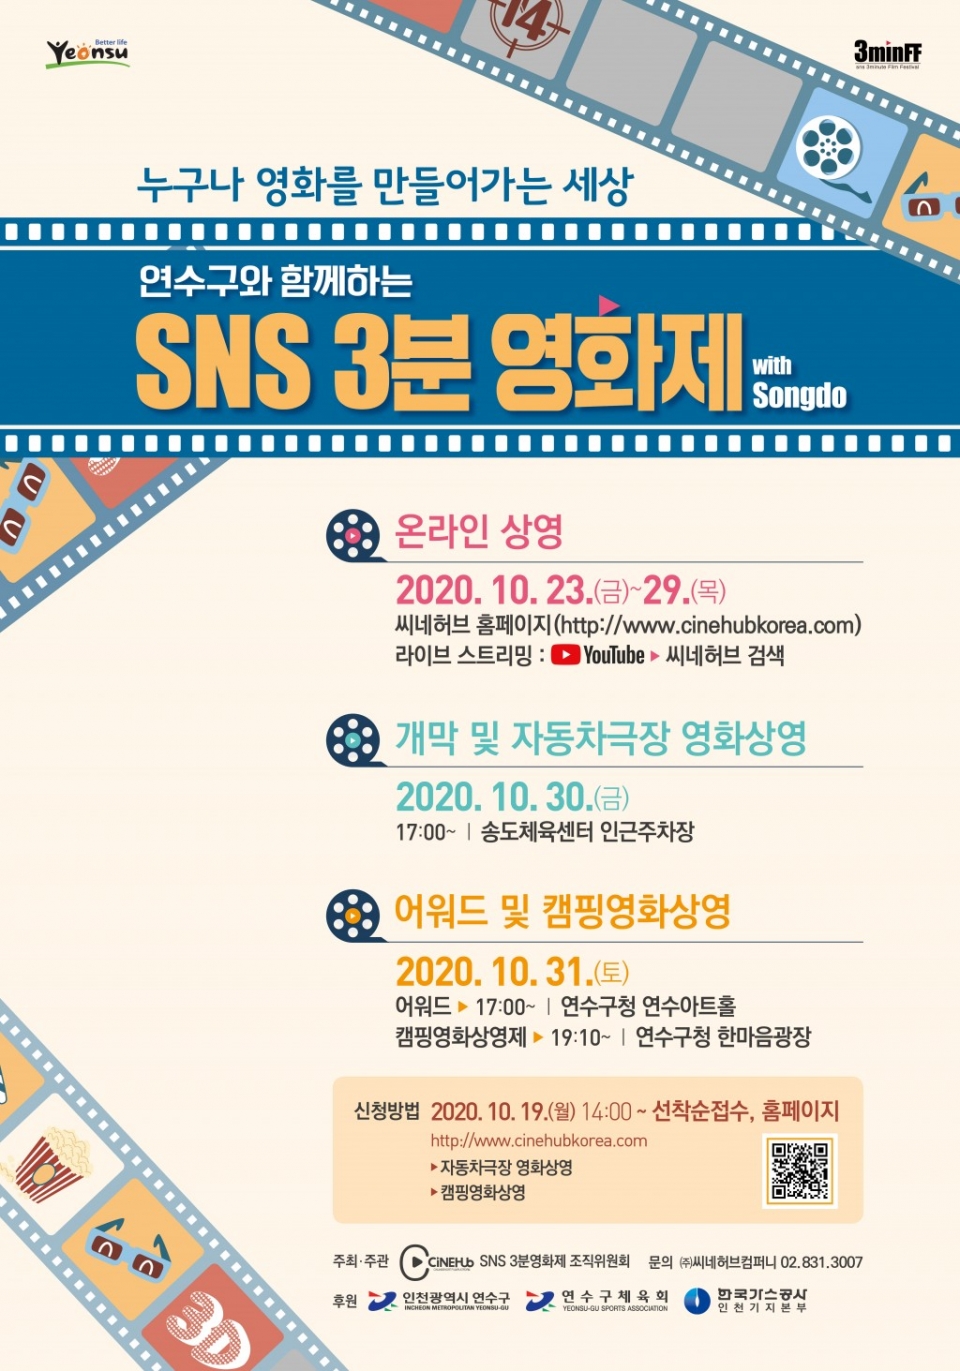 ‘SNS 3분영화제’ 포스터. (인천 연수구 제공)